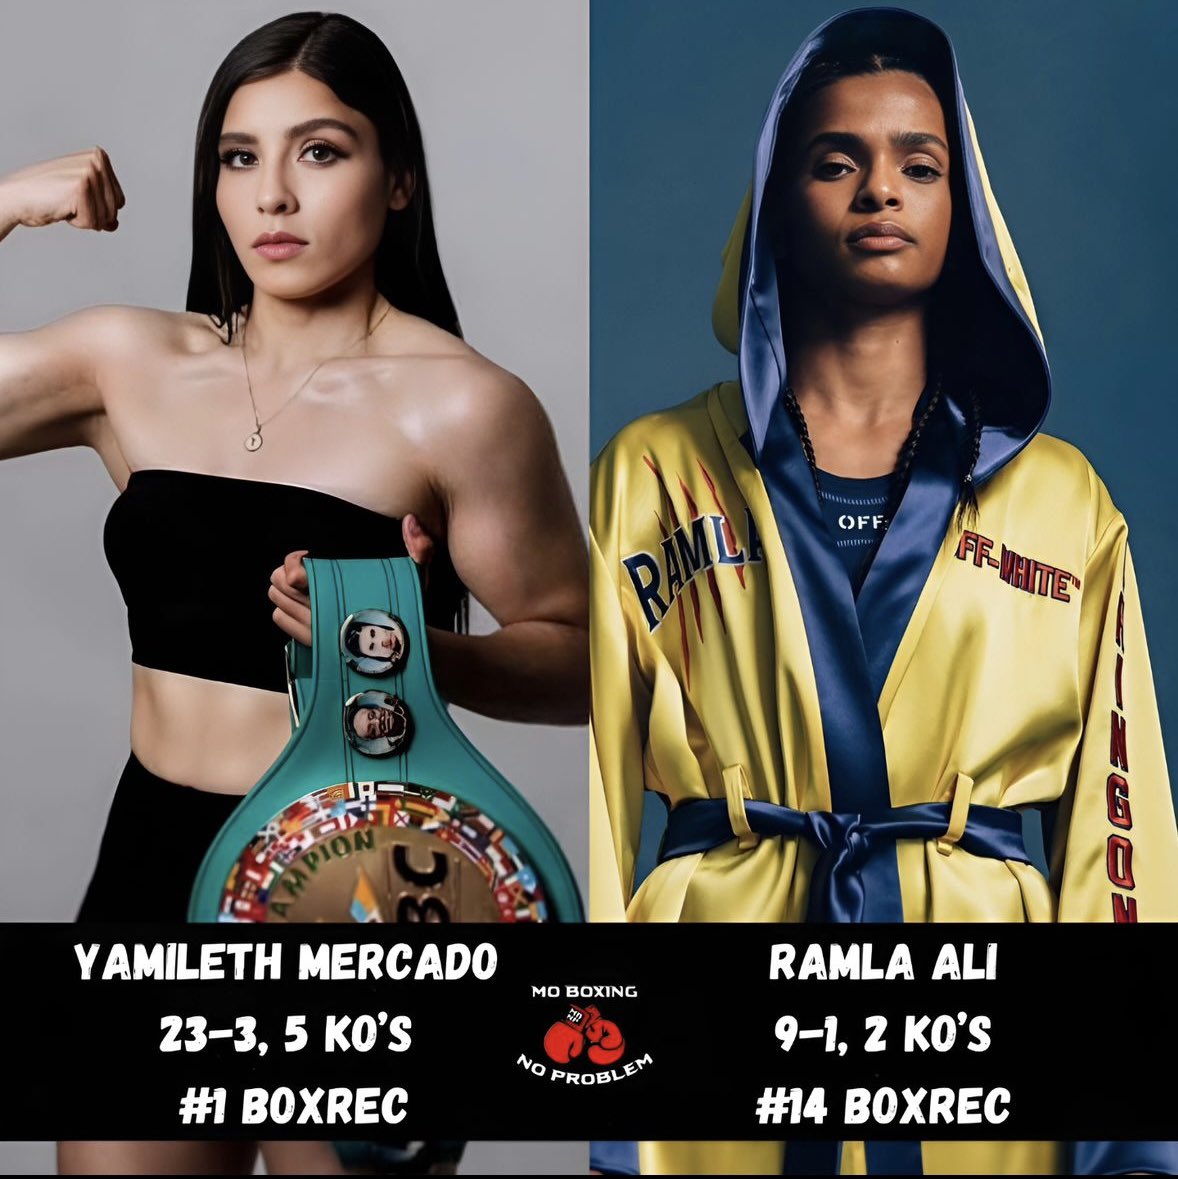 Yamileth Mercado is set to defend her WBC World Super Bantamweight title vs. Ramla Ali on June 29th as part of the Estrada-Rodriguez undercard 🥊

@YeimiMercado16 vs. @ramlaali 

#boxing #yamilethmercado #ramlaali #juanfranciscoestrada #jesserodriguez #estradarodriguez